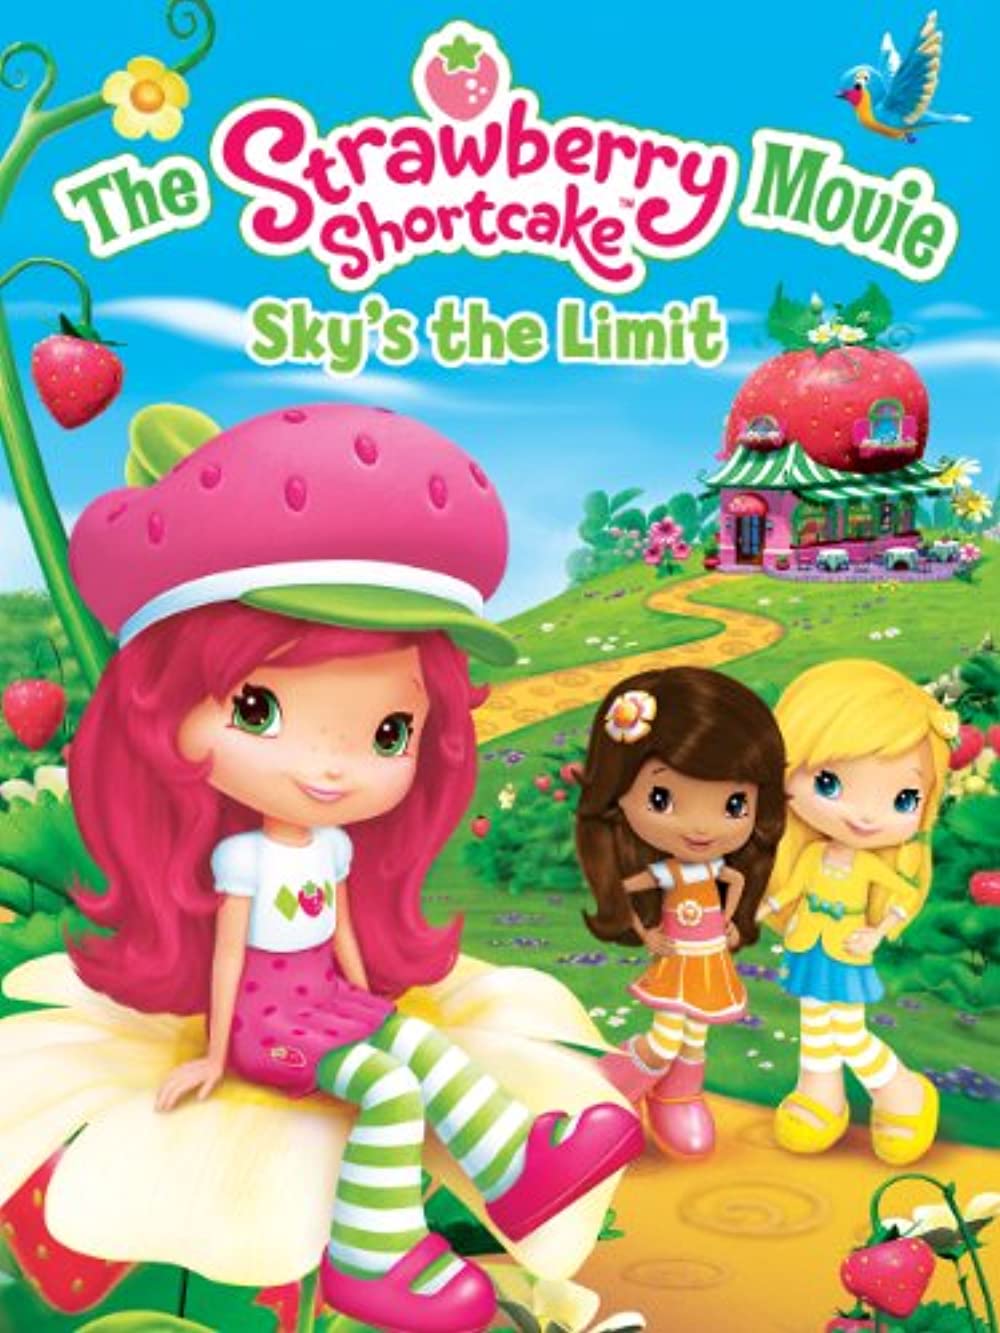 Download The Strawberry Shortcake Movie: Sky's the Limit Movie | Download The Strawberry Shortcake Movie: Sky's The Limit